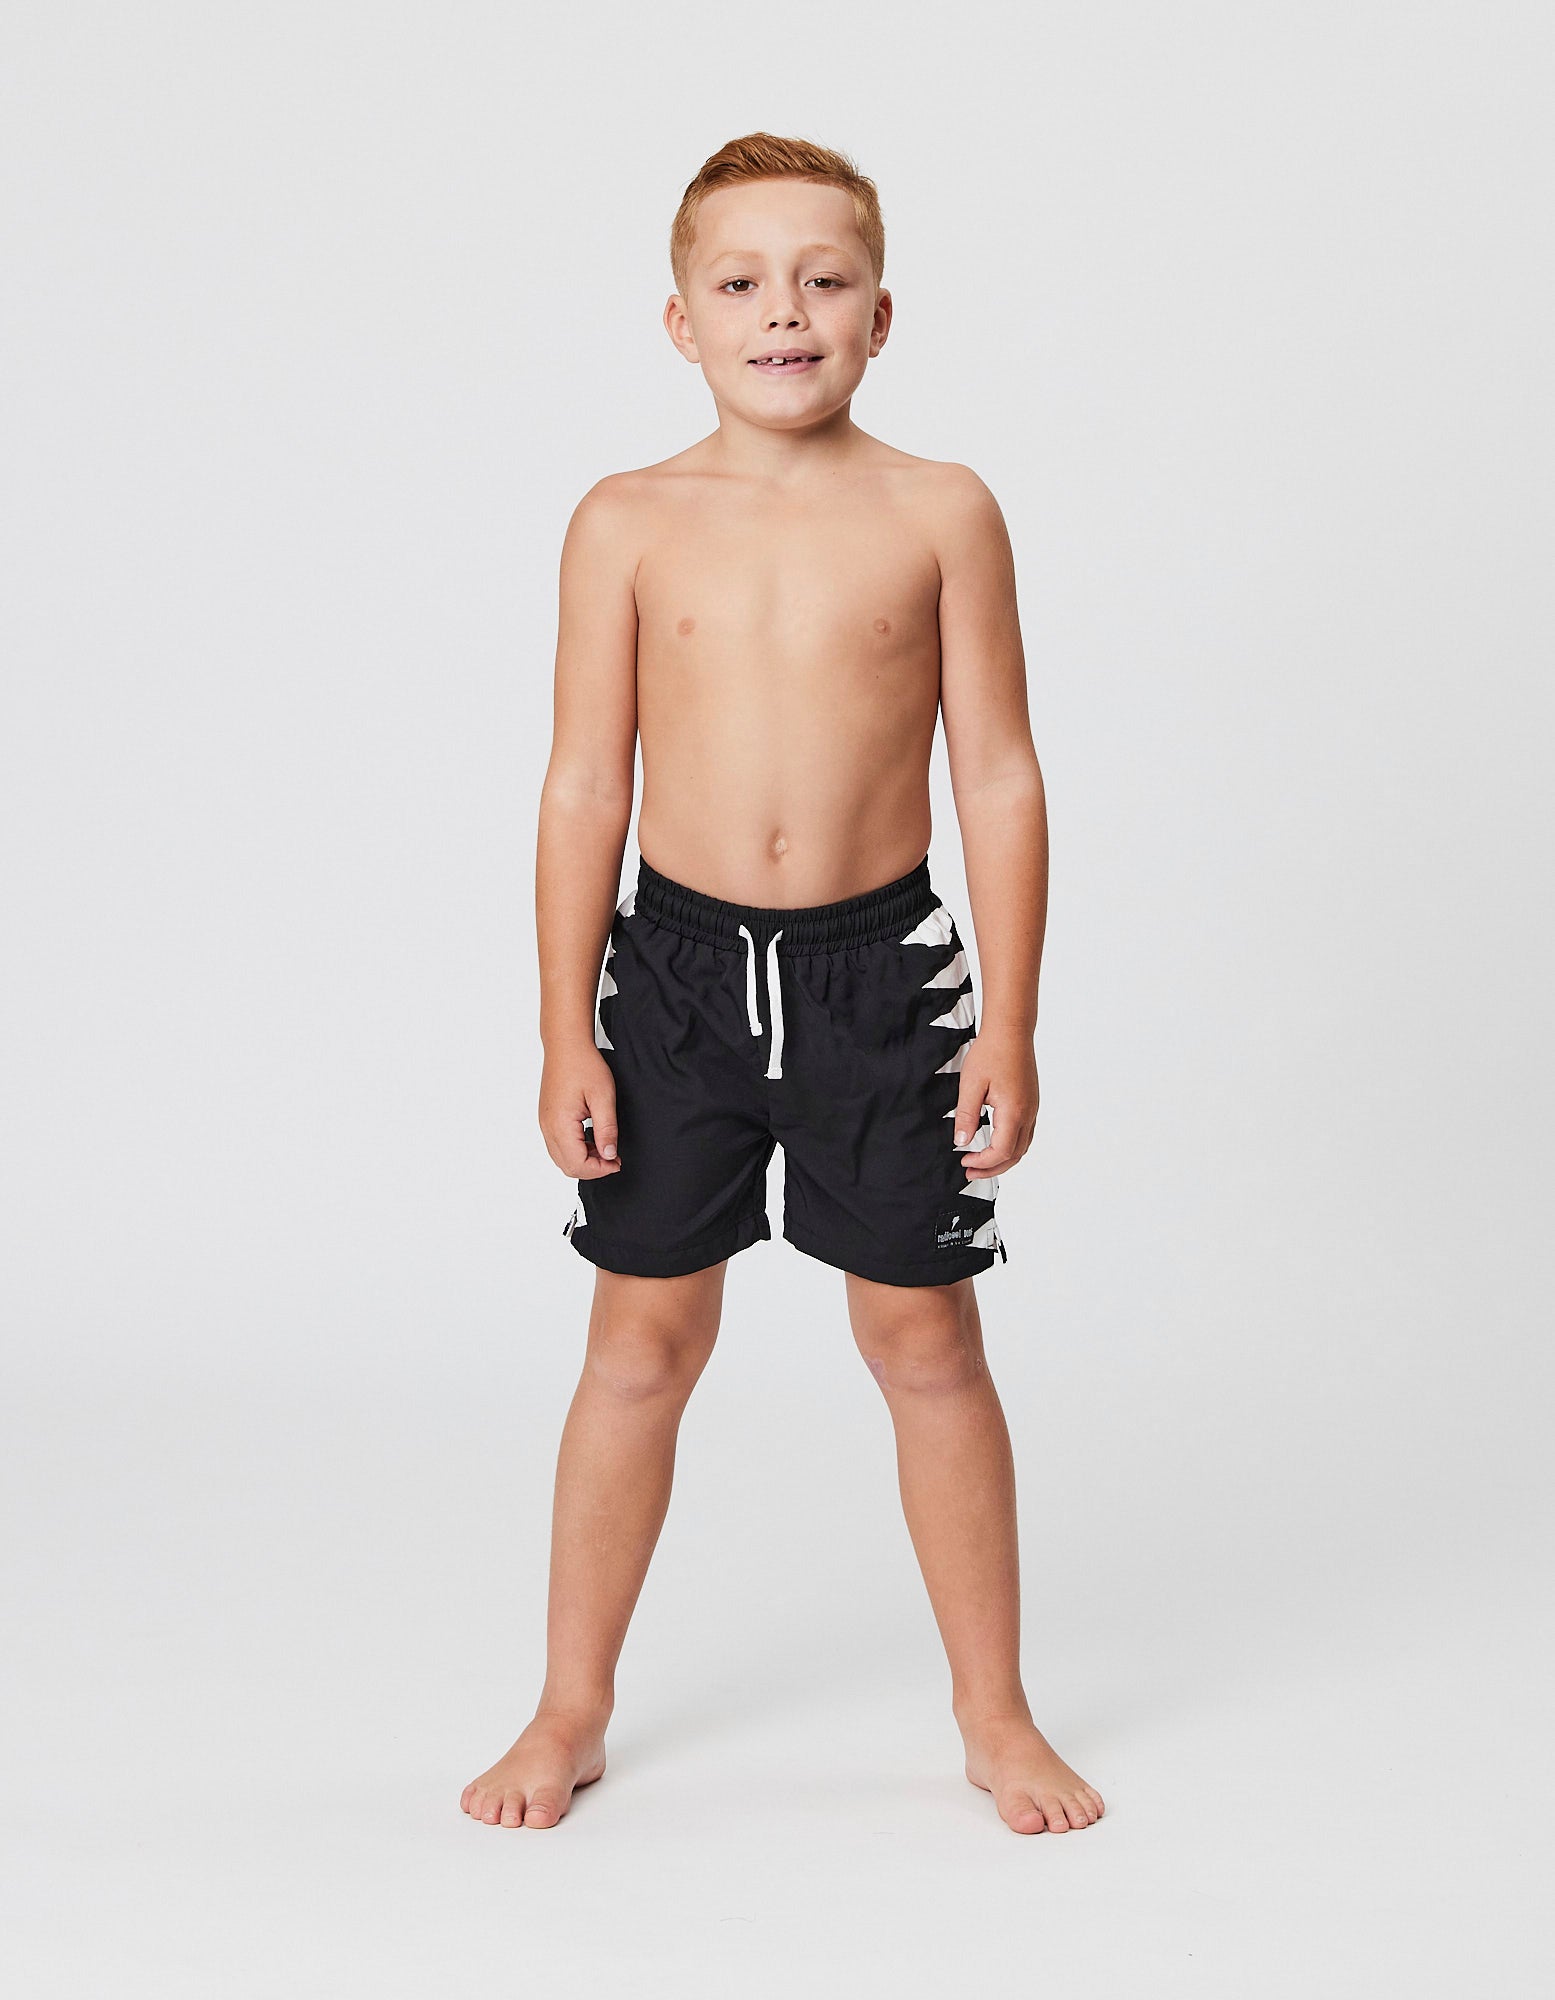 Radicool Kids Shark Teeth Boardshorts in black on model